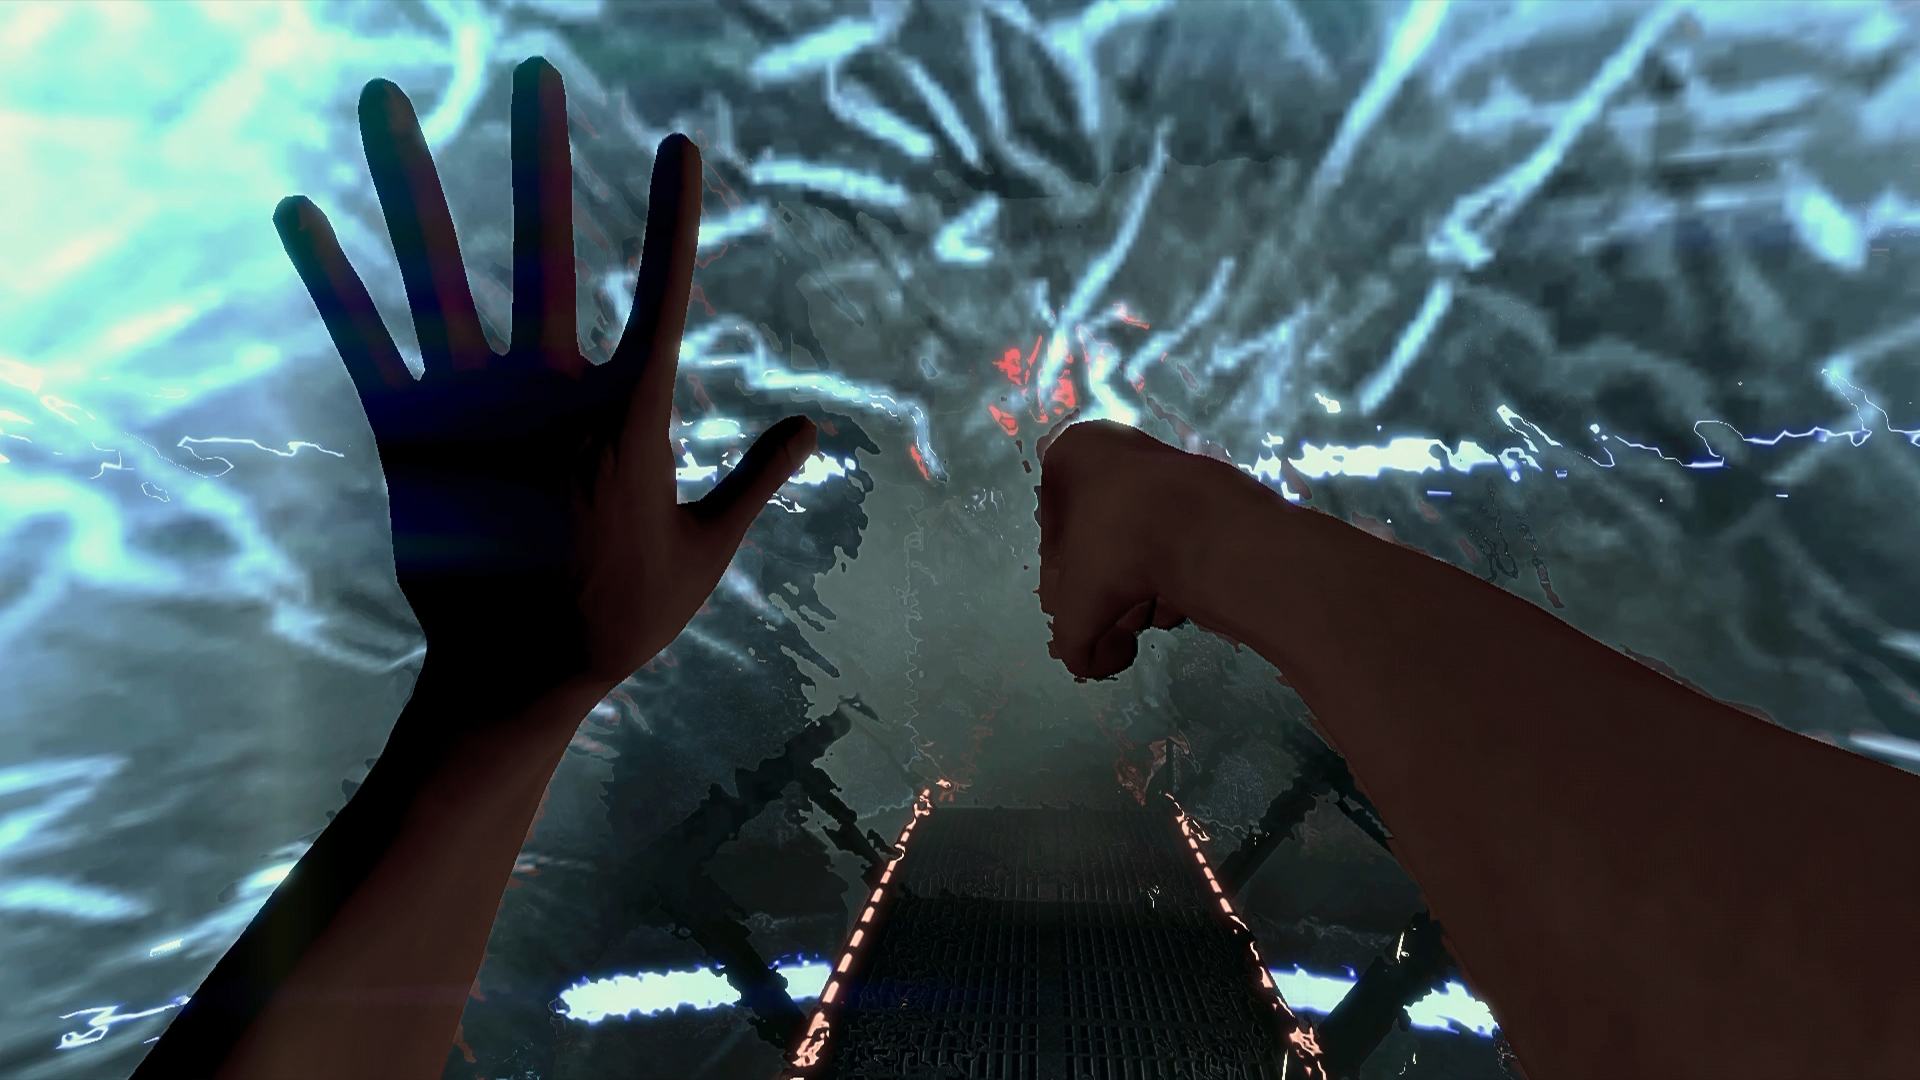 Места игр 2014. Infinity Runner игра. Infinity Runner (2014). Руки игрового от первого лица. Руки от первого лица арт.